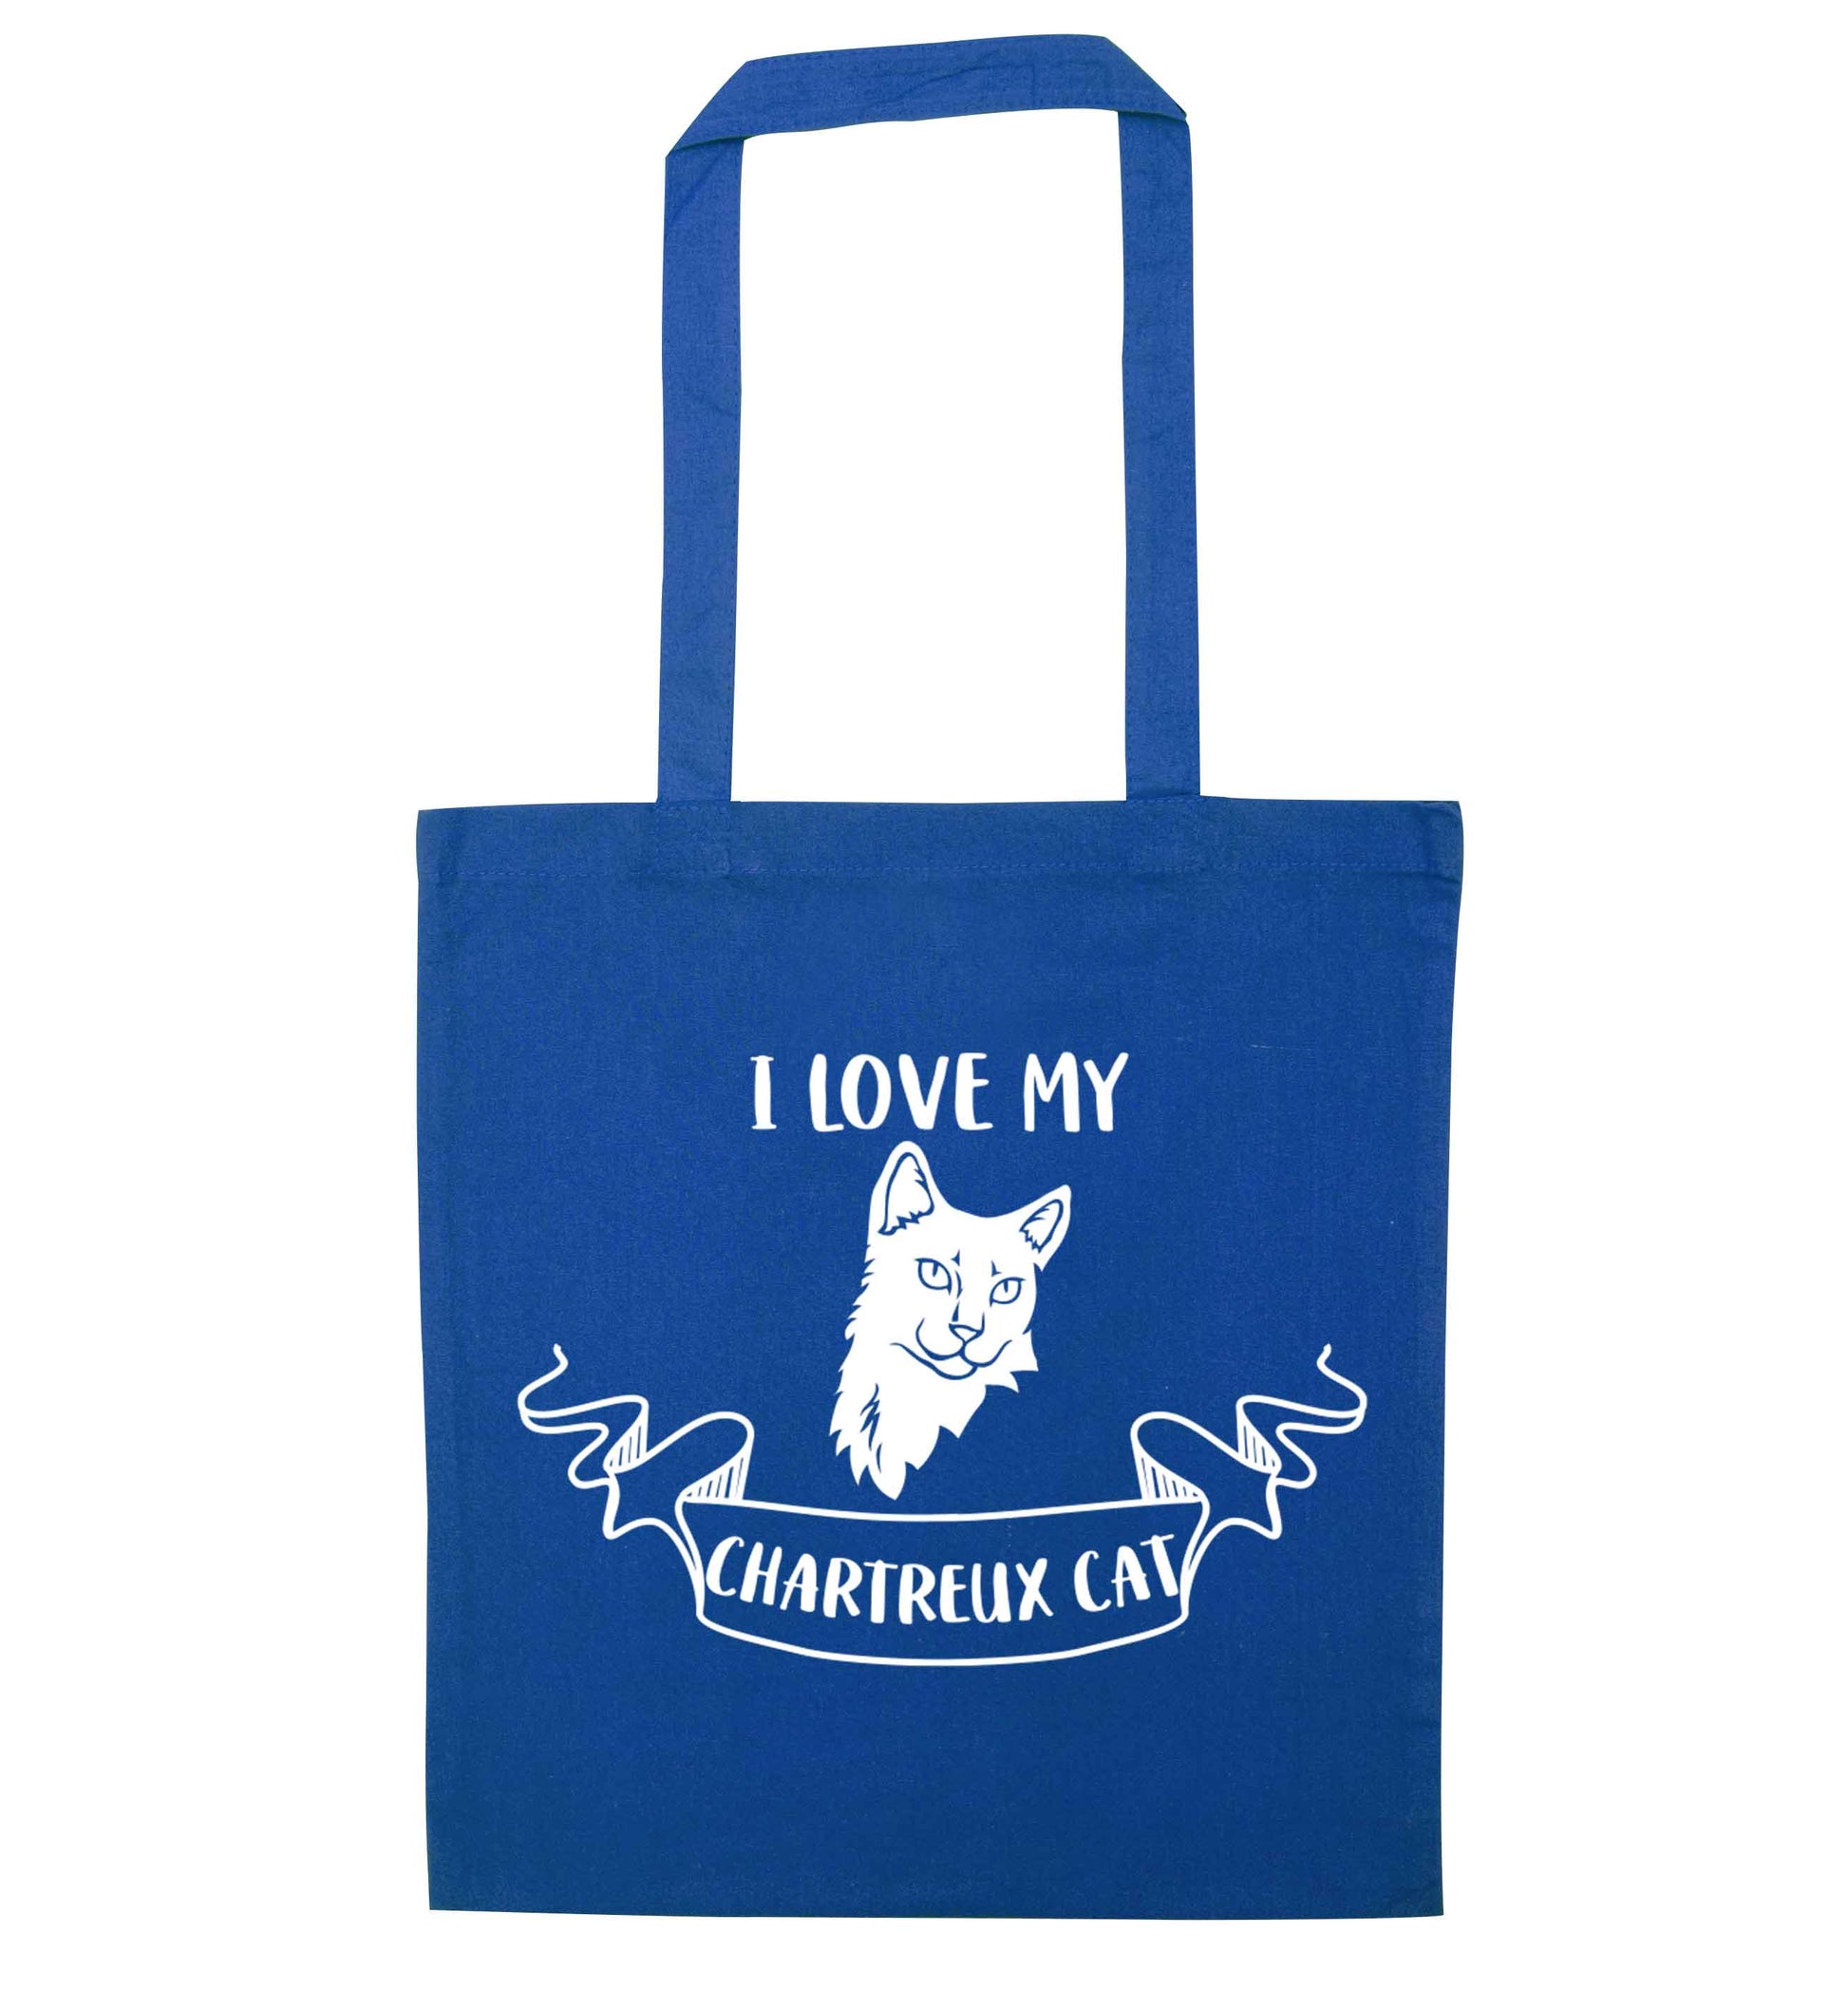 I love my chartreux cat blue tote bag